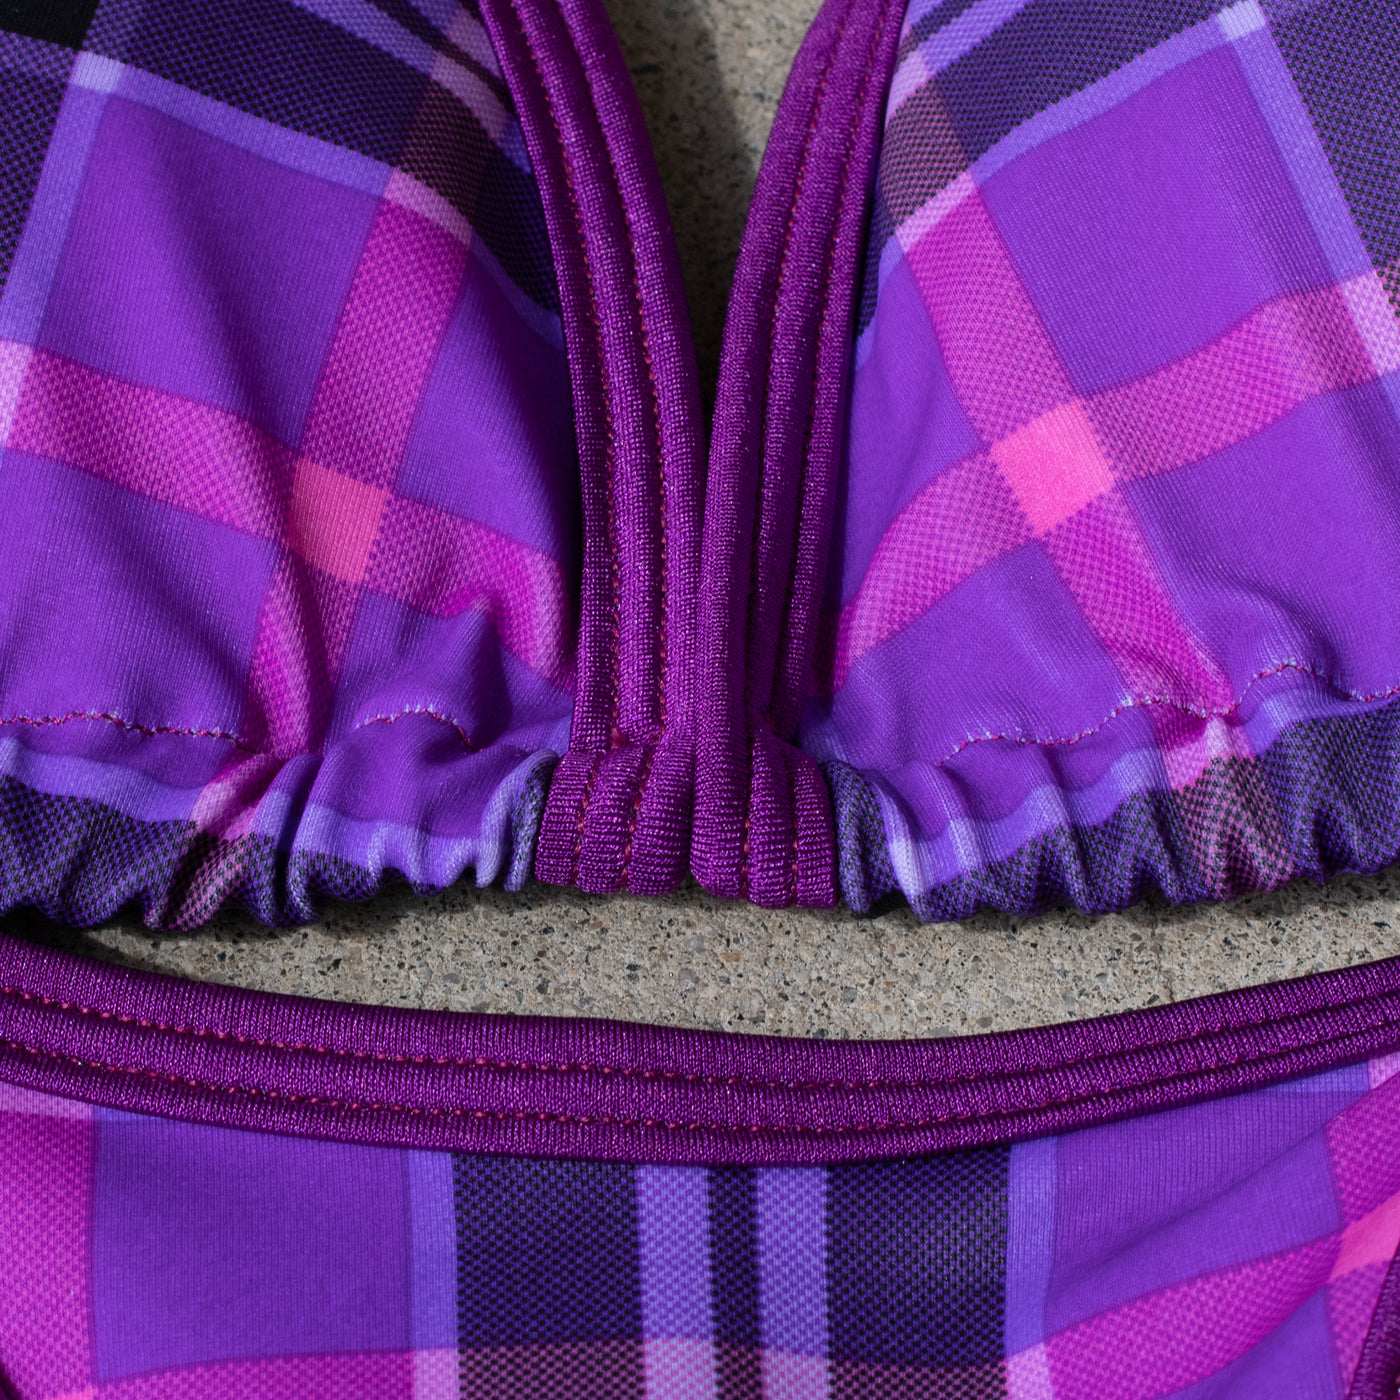 Purple Checkered Print Posing Suit | Scrunch Butt Bikini | NPC/IFBB Practice Suit